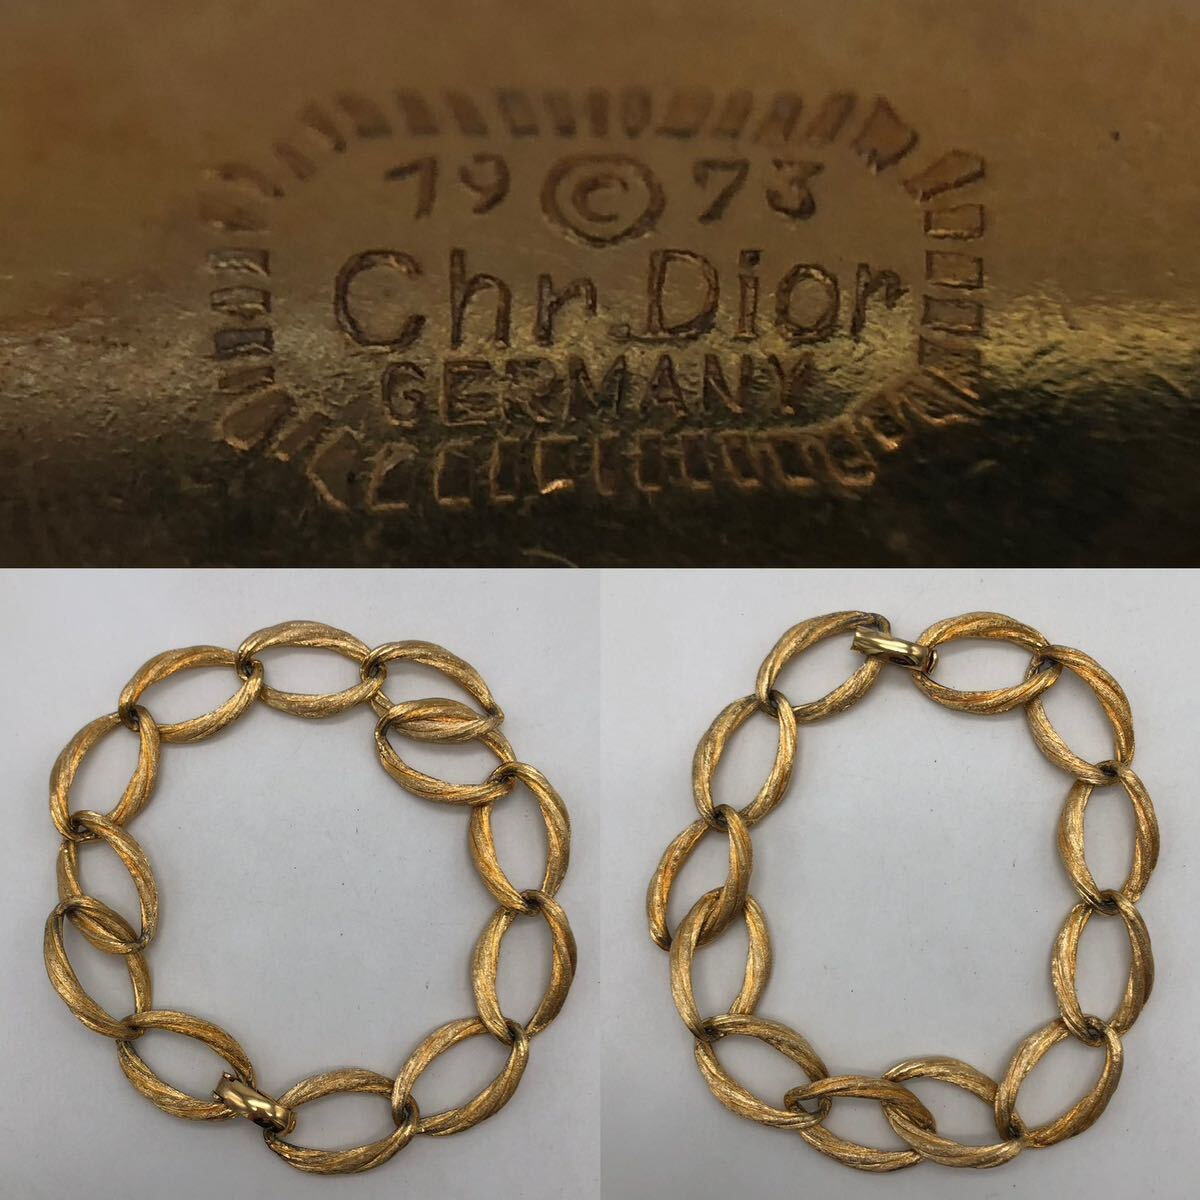 Christian Dior Christian Dior necklace Gold big chain accessory P1404